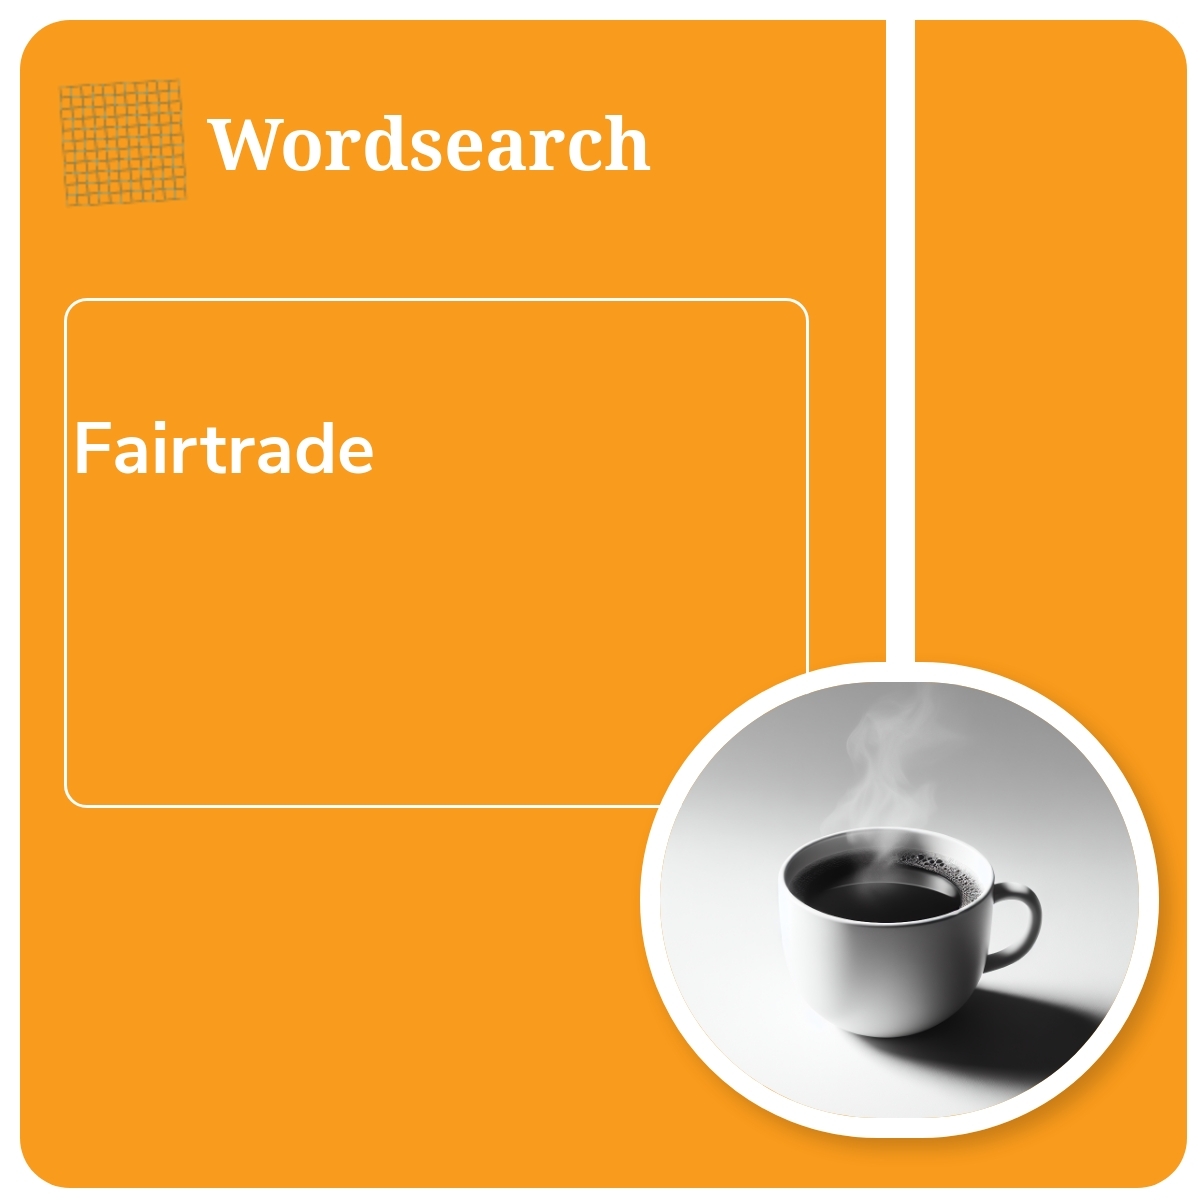 Wordsearch: Fairtrade